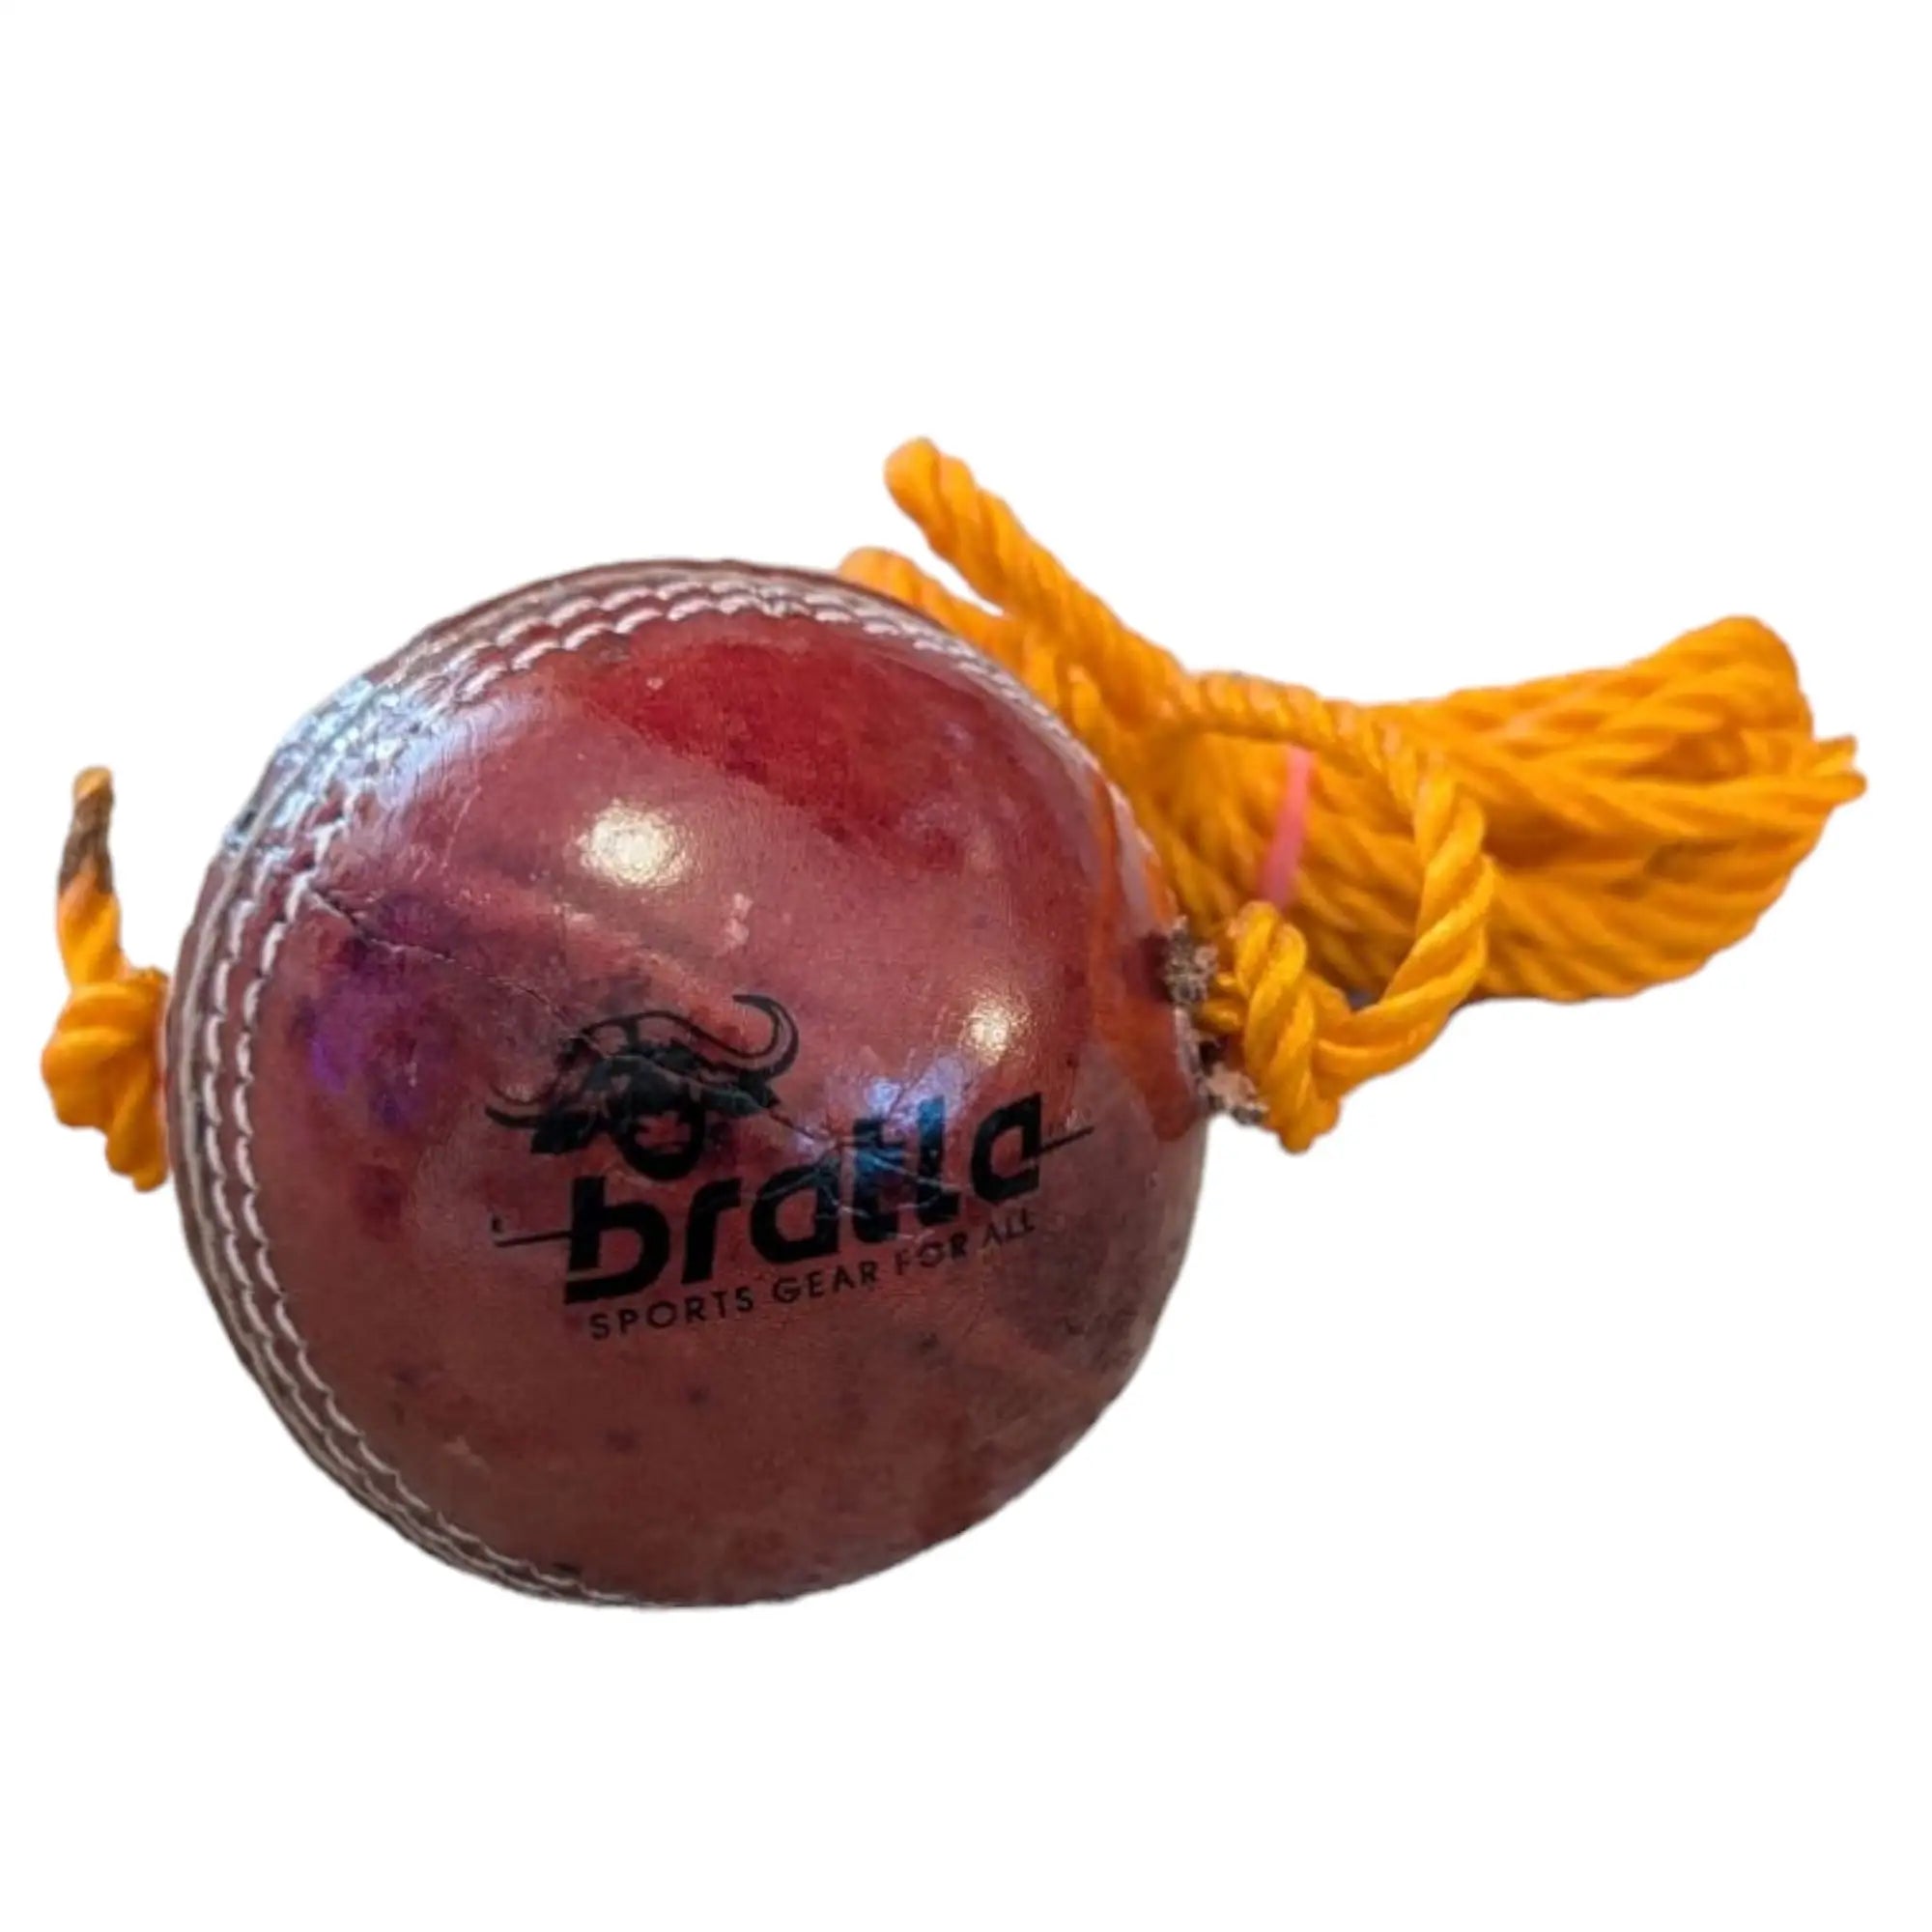 Bratla Hanging Cricket Ball with Cord String Leather Seasoned Cricket Ball For Batting Practice - BALL - TRAINING SENIOR